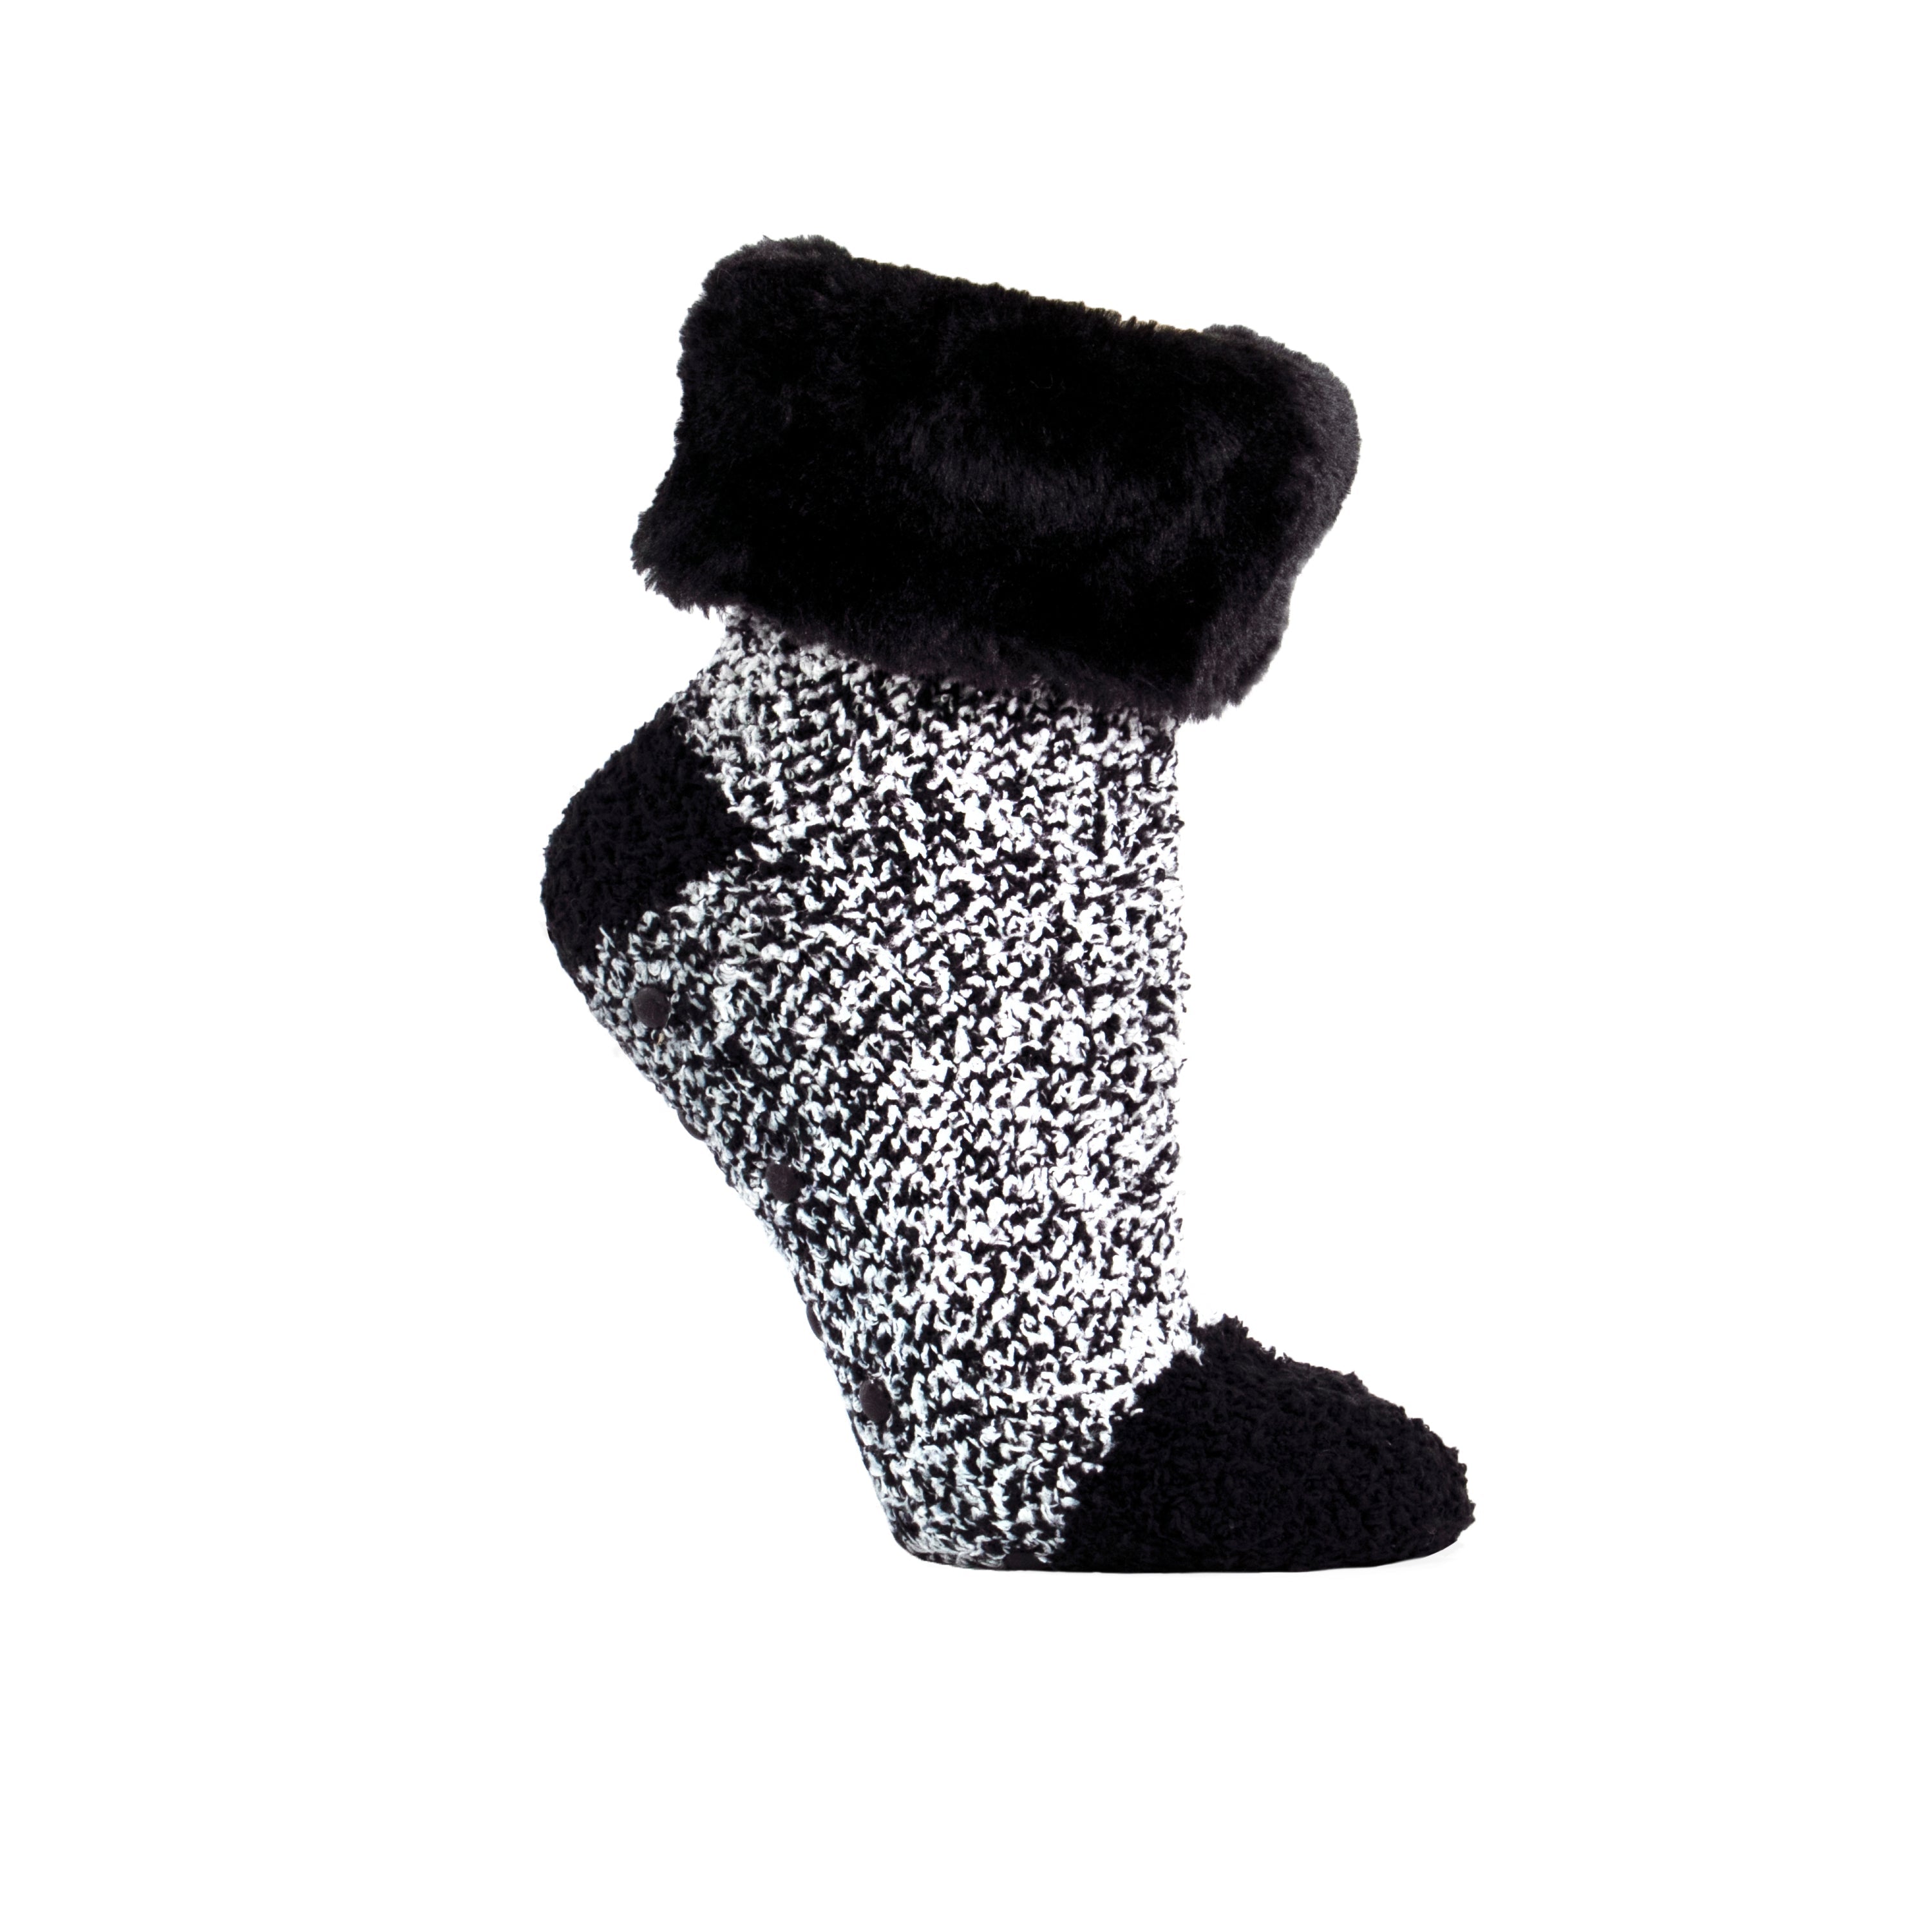 Non-Skid Fur Cuff Chenille Slipper Socks Fuzzy Heather Black One Size Fits All By MinxNY